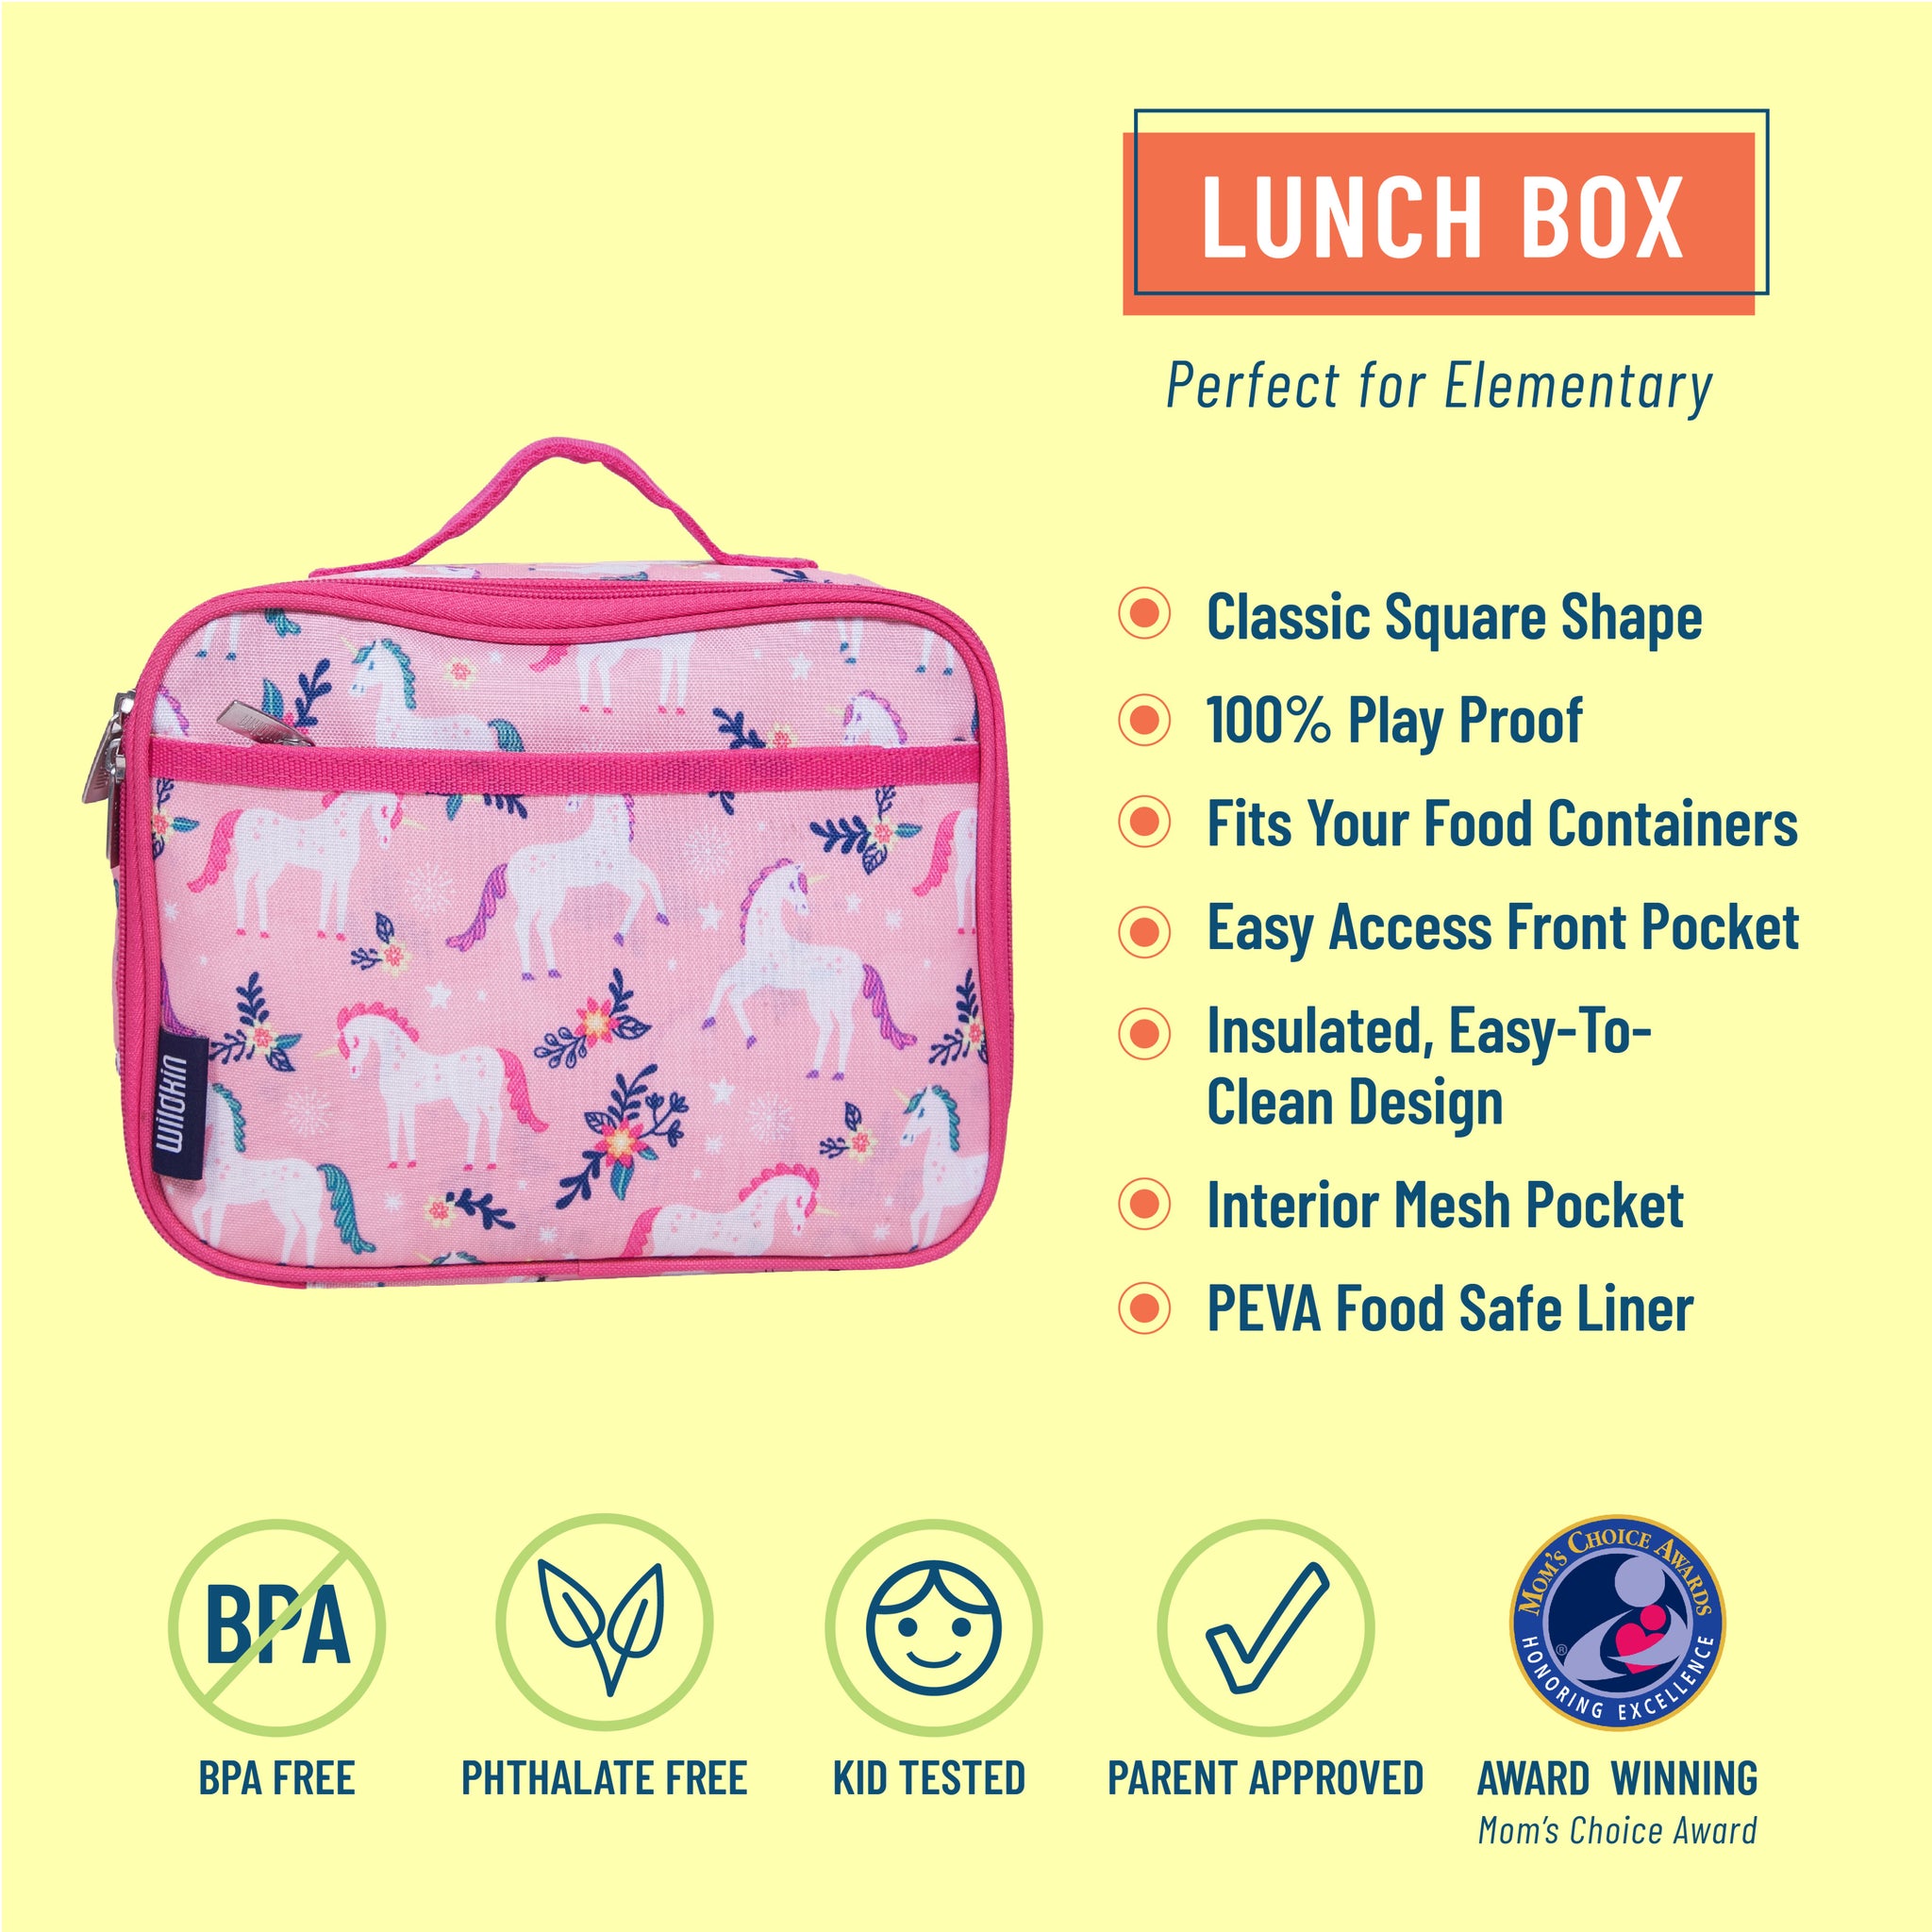 Wildkin Magical Unicorns Lunch Box